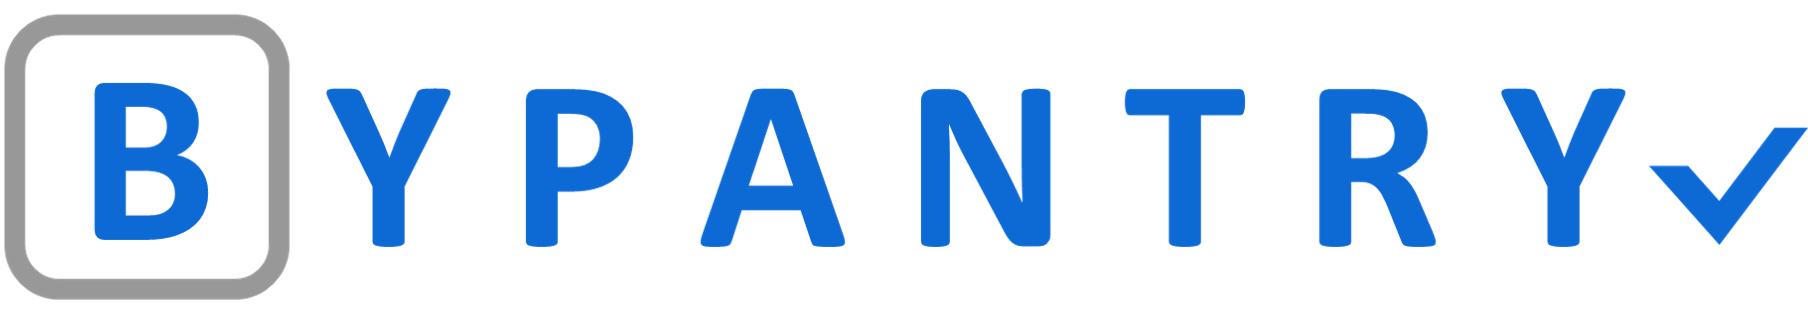 bypantry logo